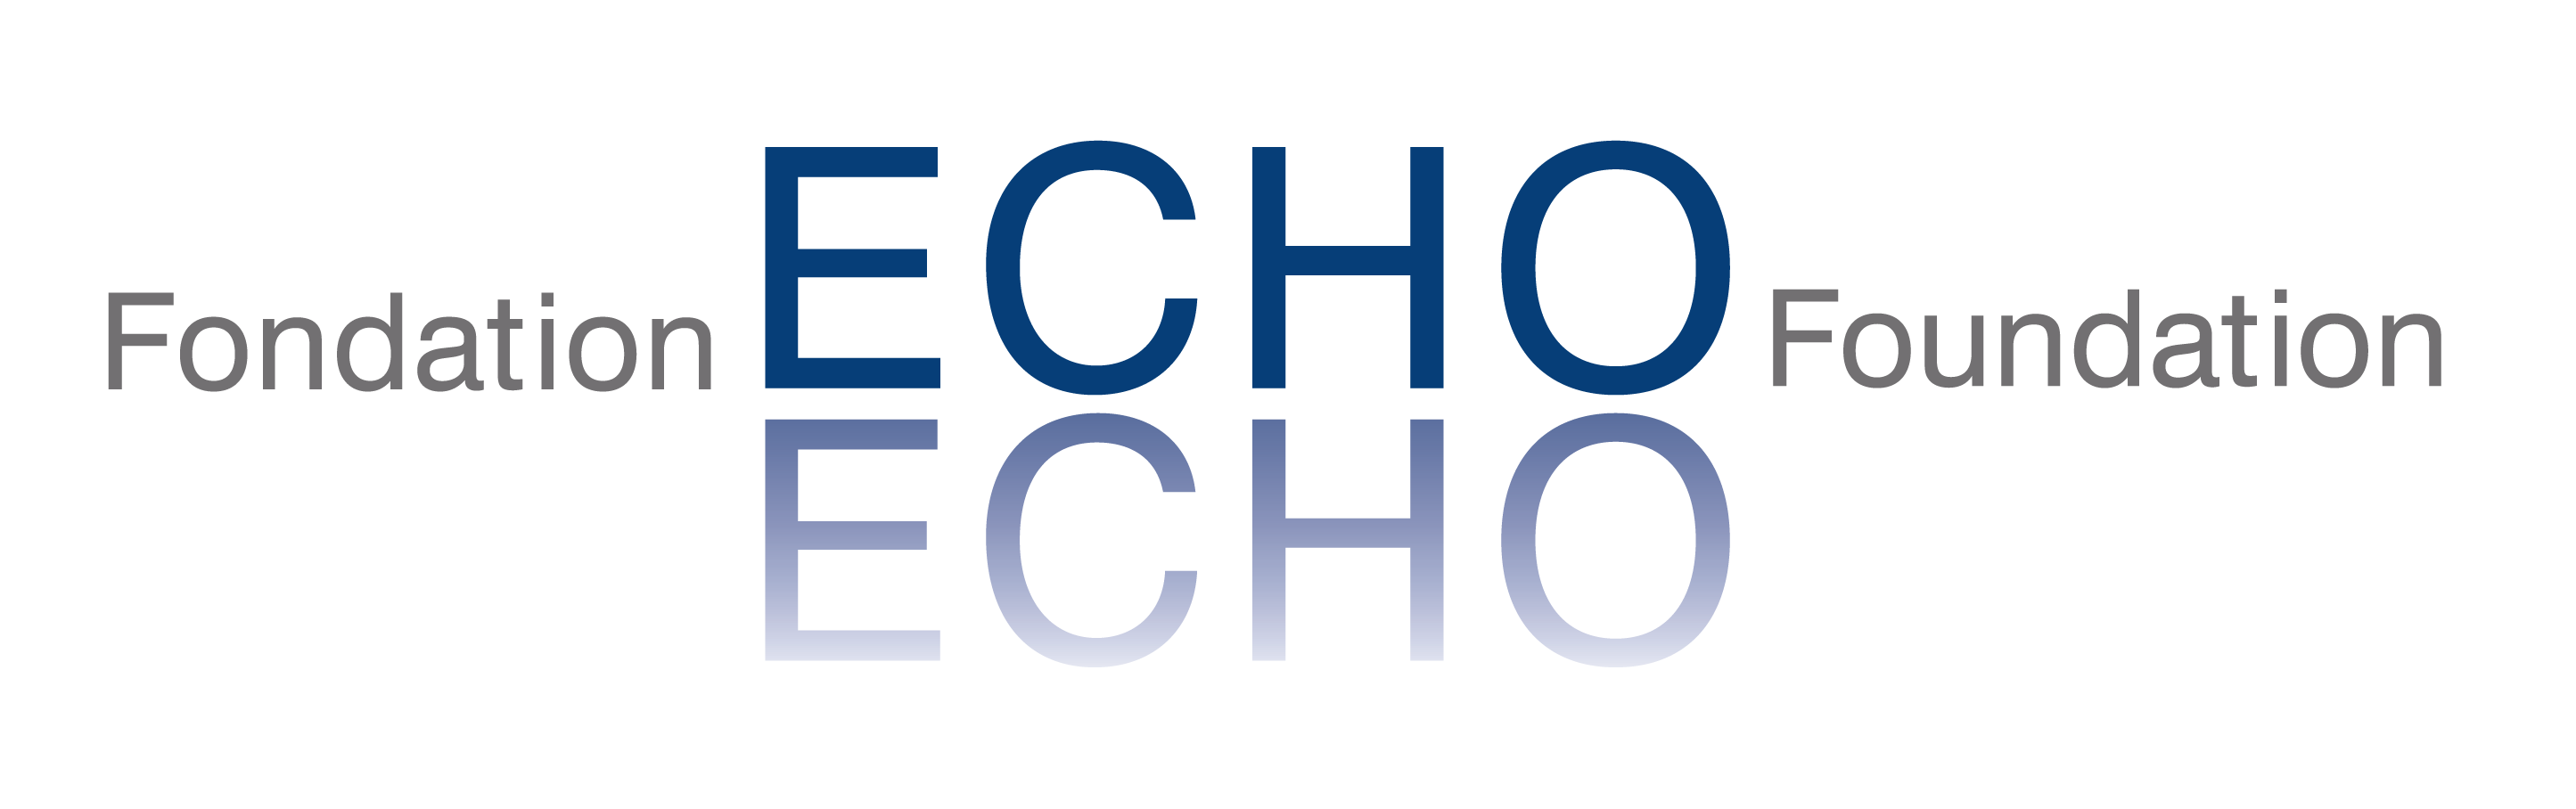 Echo Foundation Logo